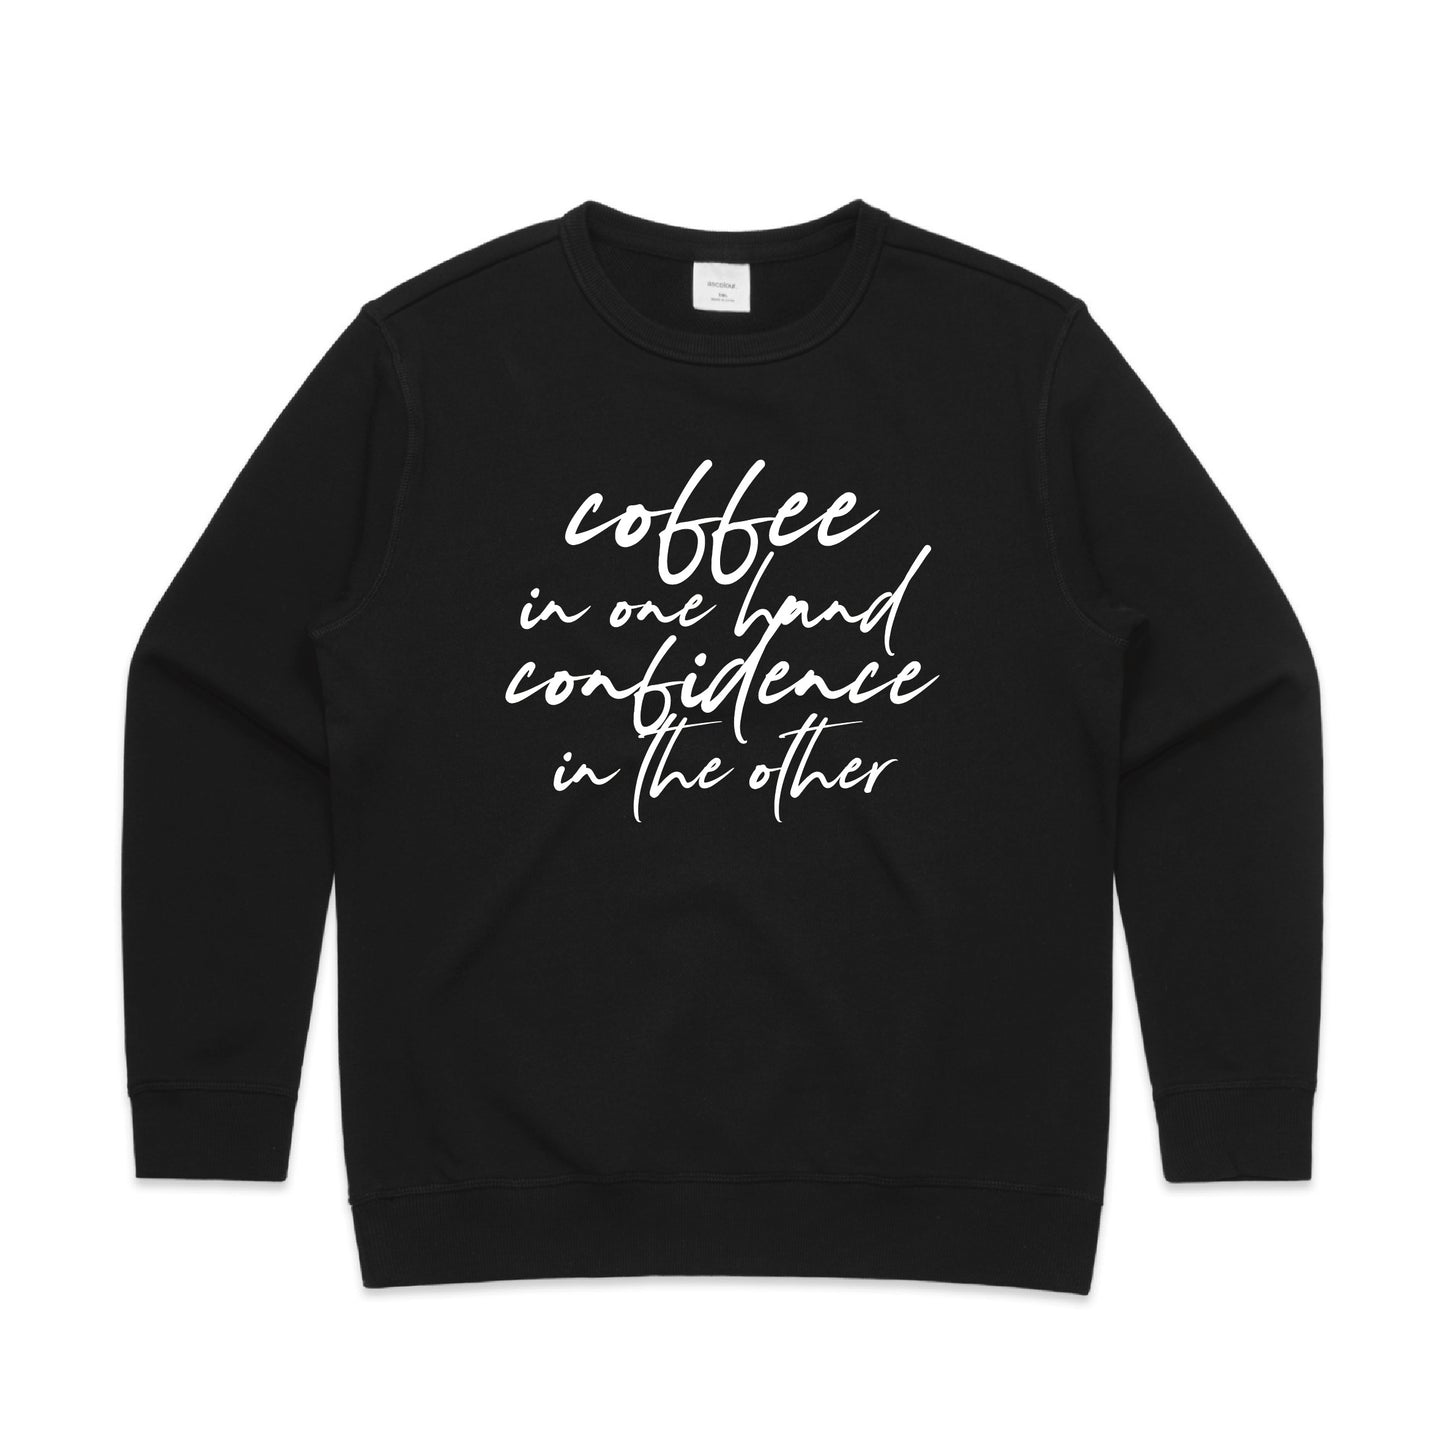 Coffee and Confidence Crew